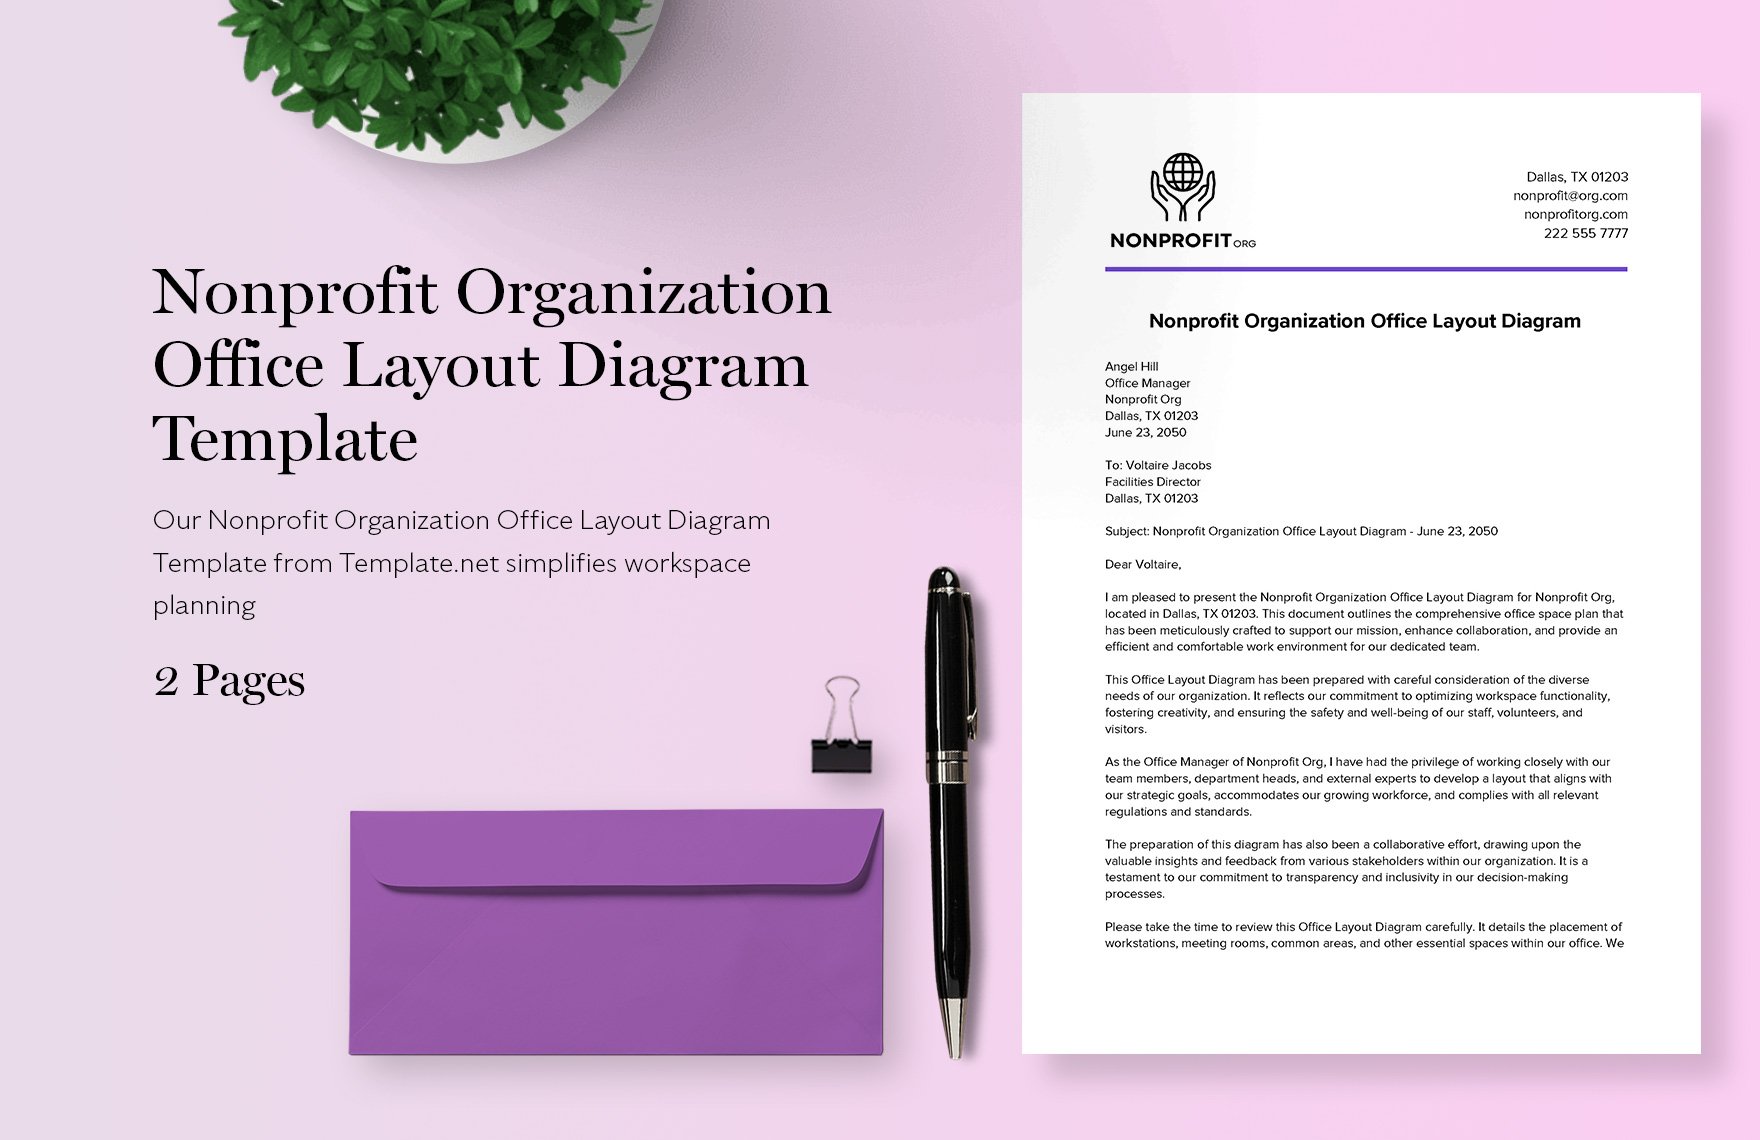 Nonprofit Organization Office Layout Diagram Template